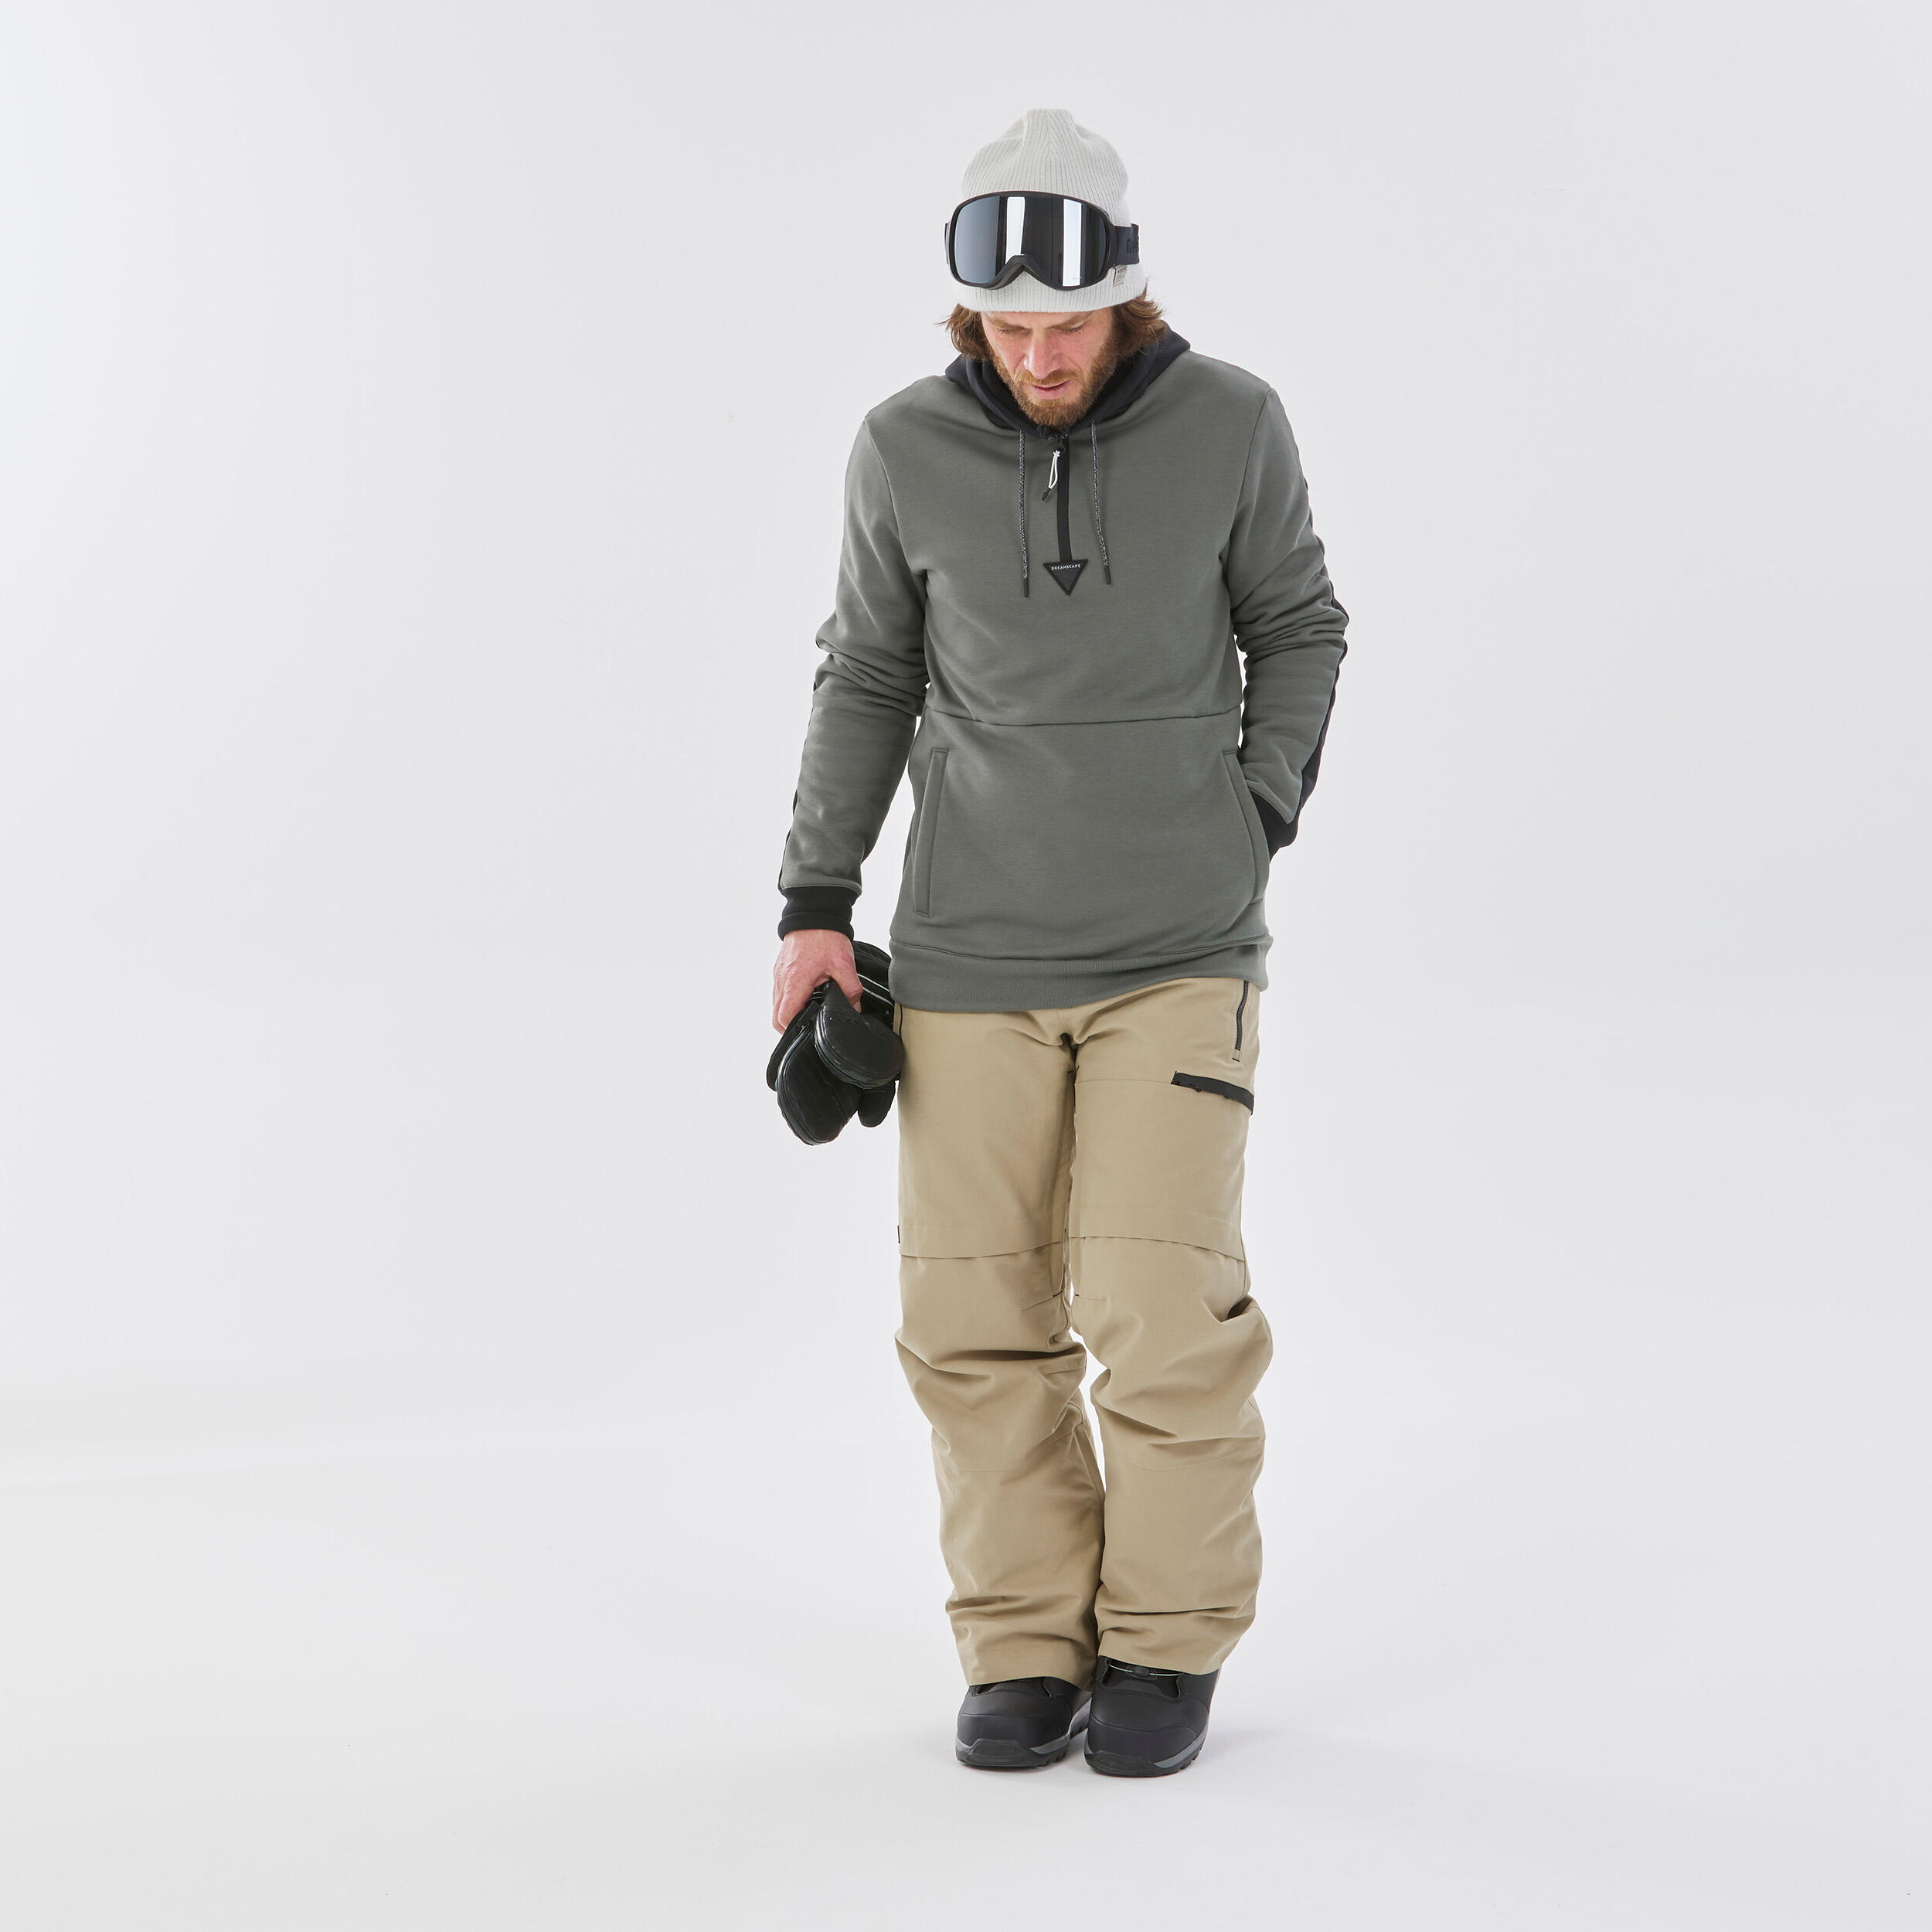 Men's Hooded Snowboard Sweatshirt - SNB HDY Khaki 4/9